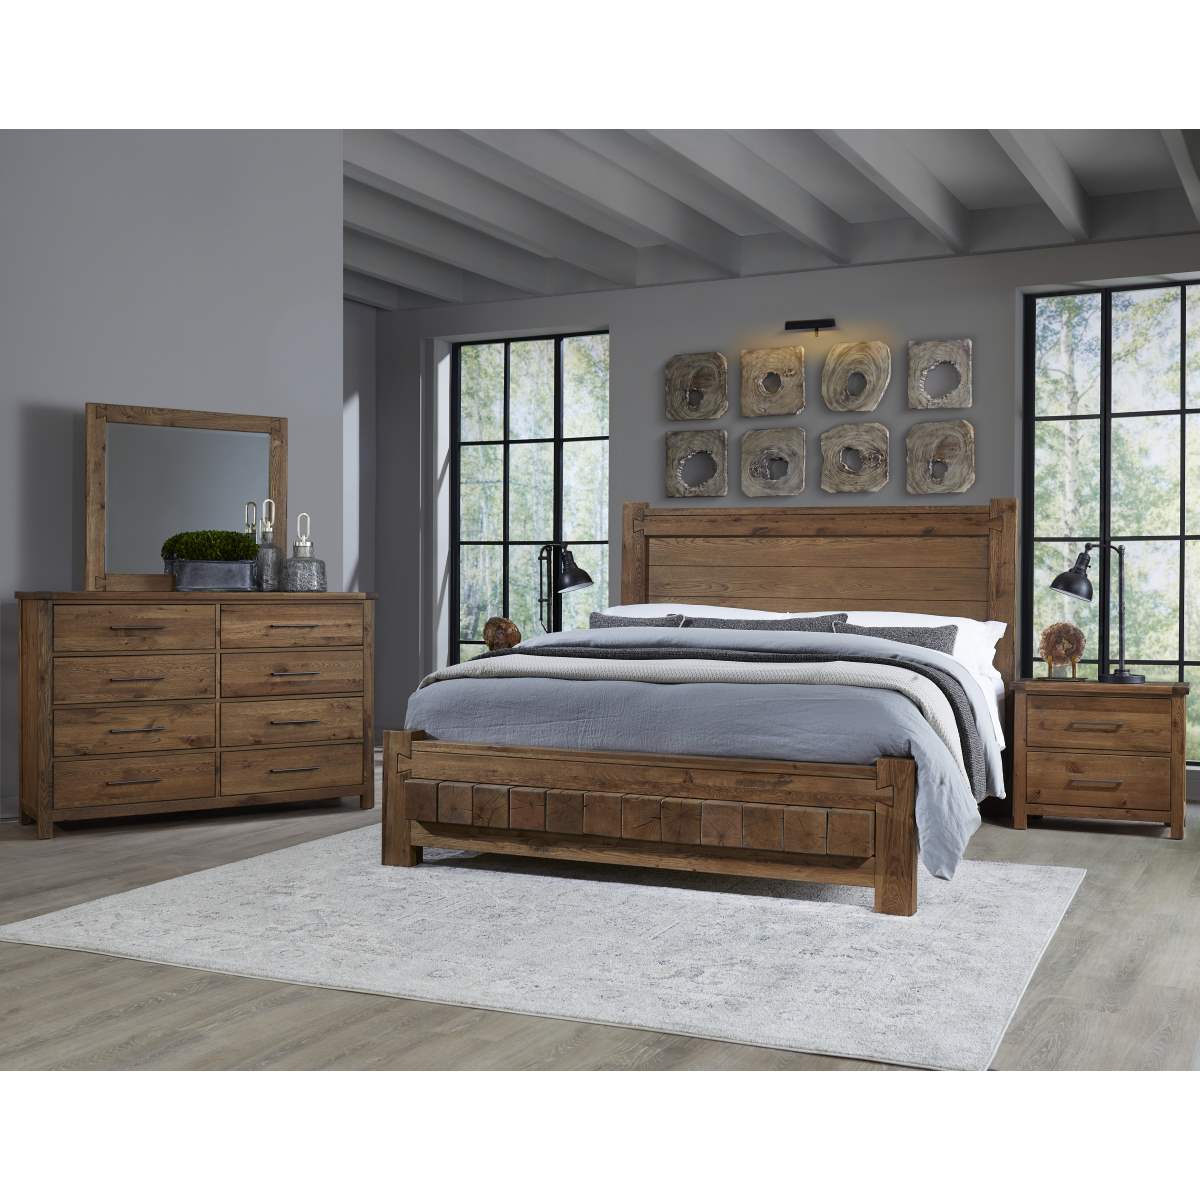 Vaughan-Bassett Dovetail King Block Bed, Dresser, Mirror and Nightstand